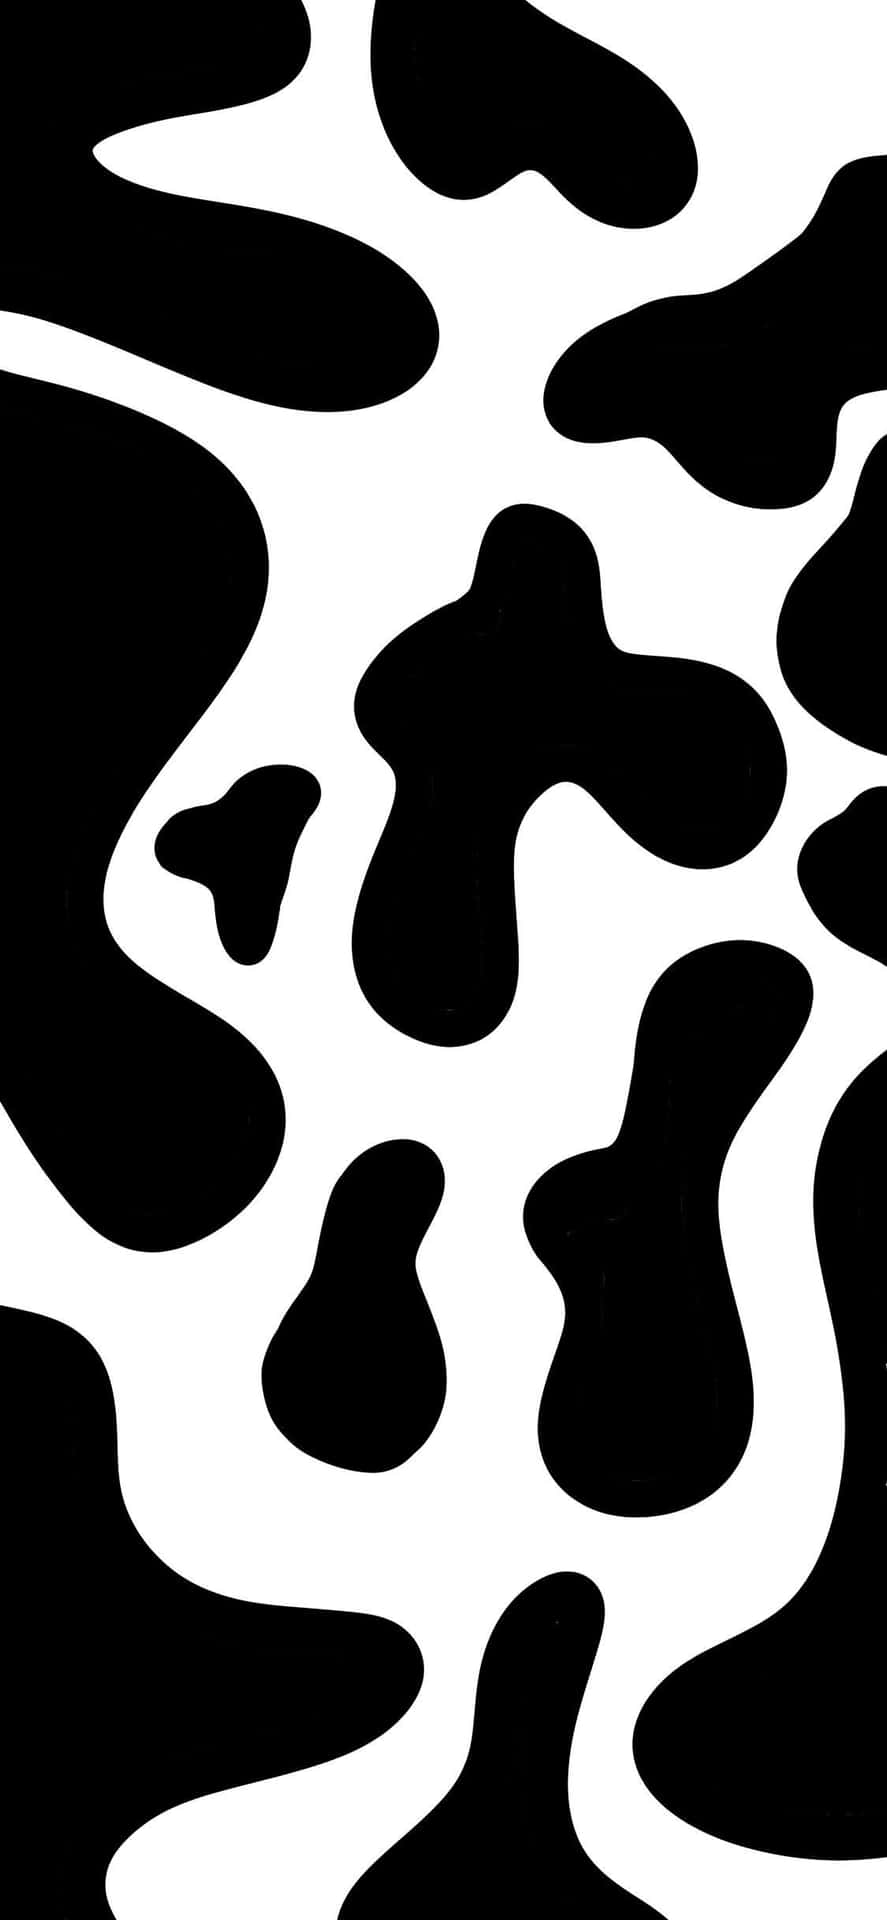 cow iphone wallpaper  Cow print wallpaper Animal print wallpaper Iphone  wallpaper pattern